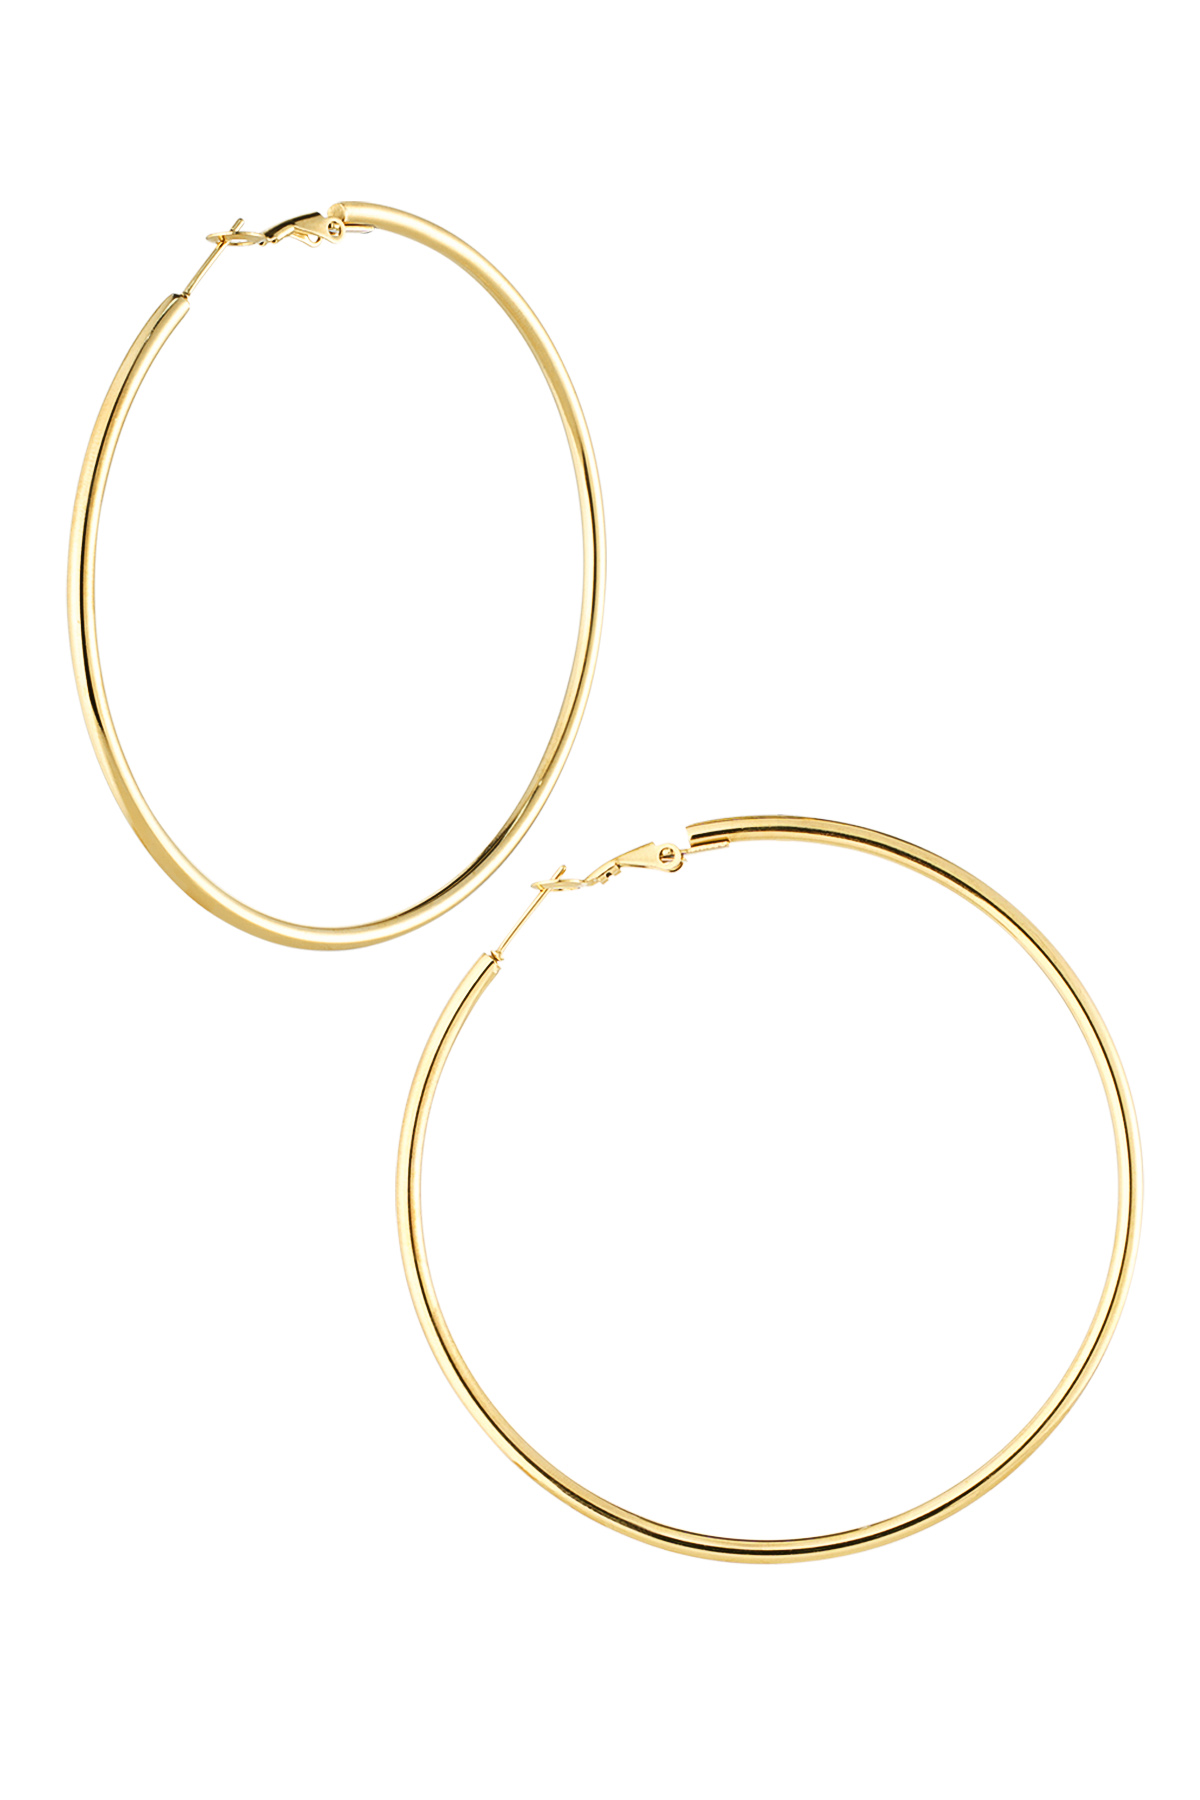 Basic hoops - gold h5 